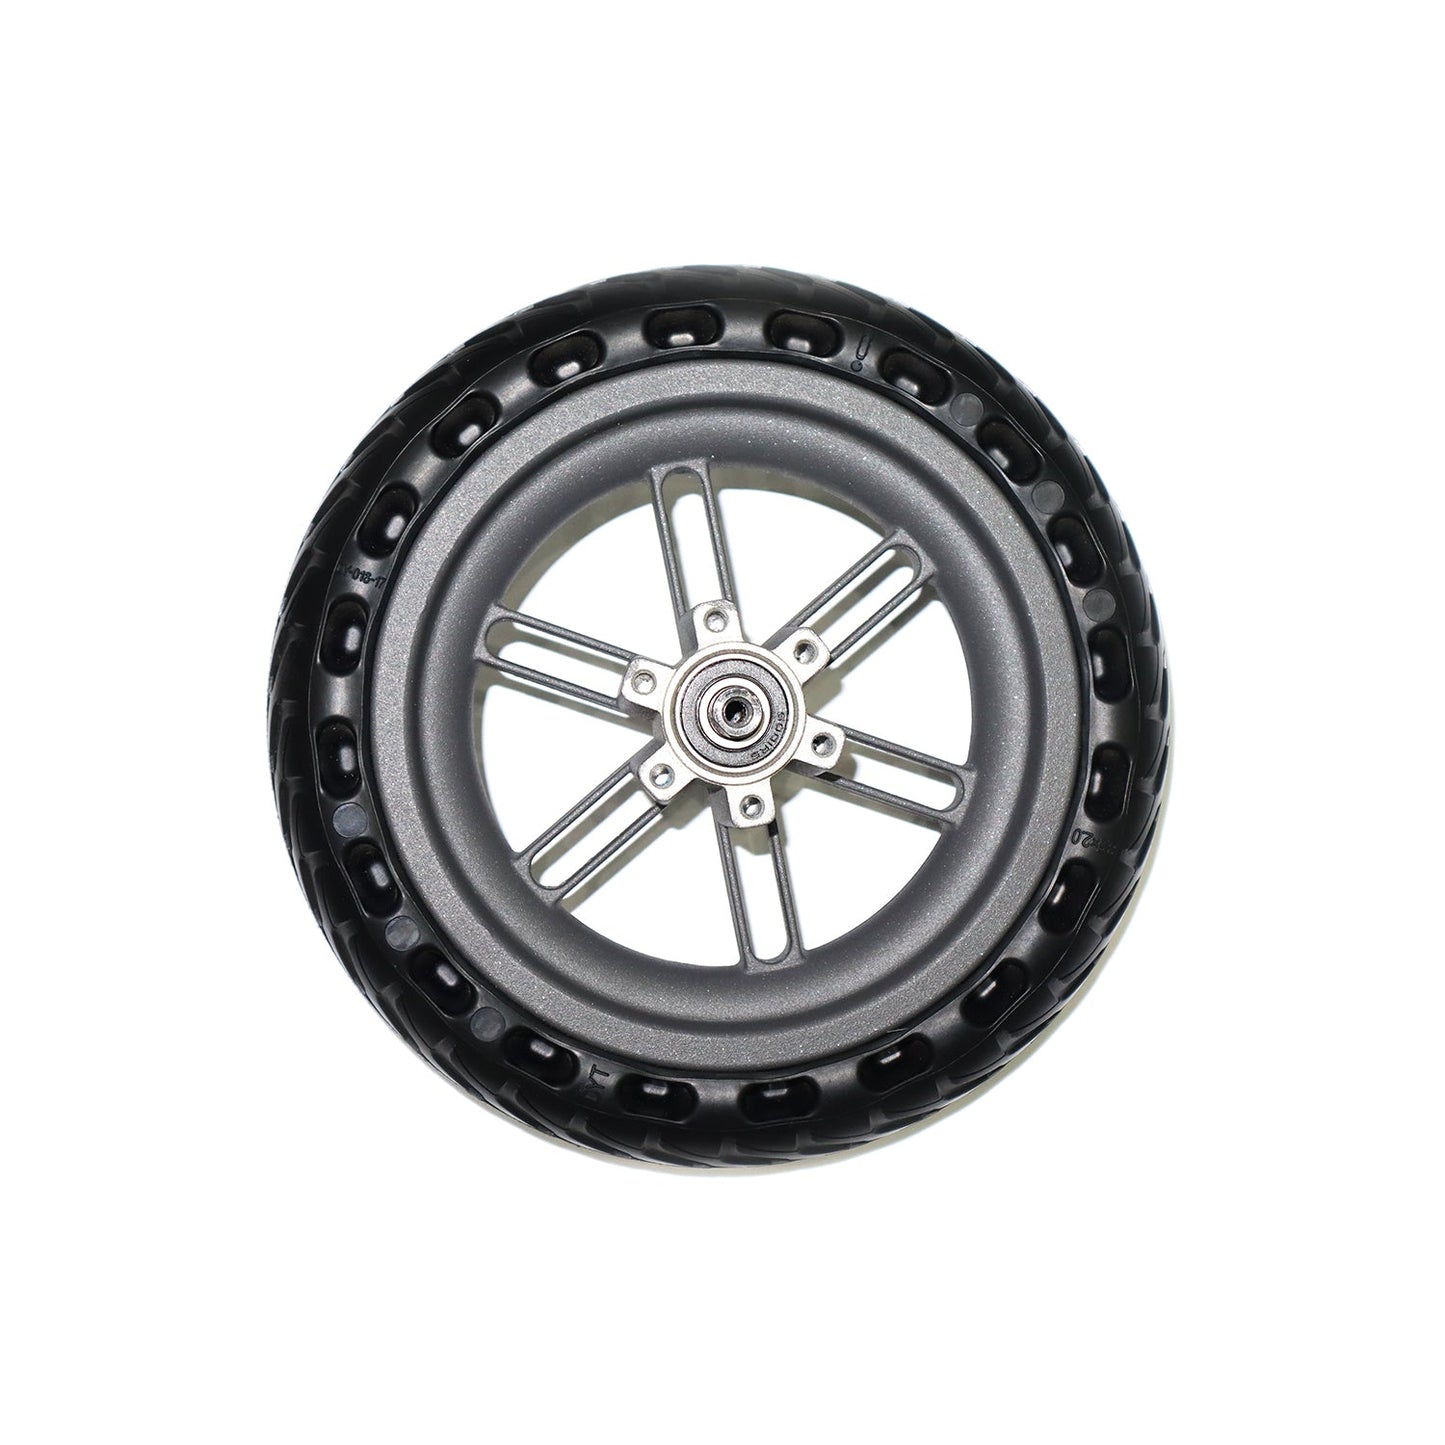 Hiboy S2/KS4 Rear Wheel